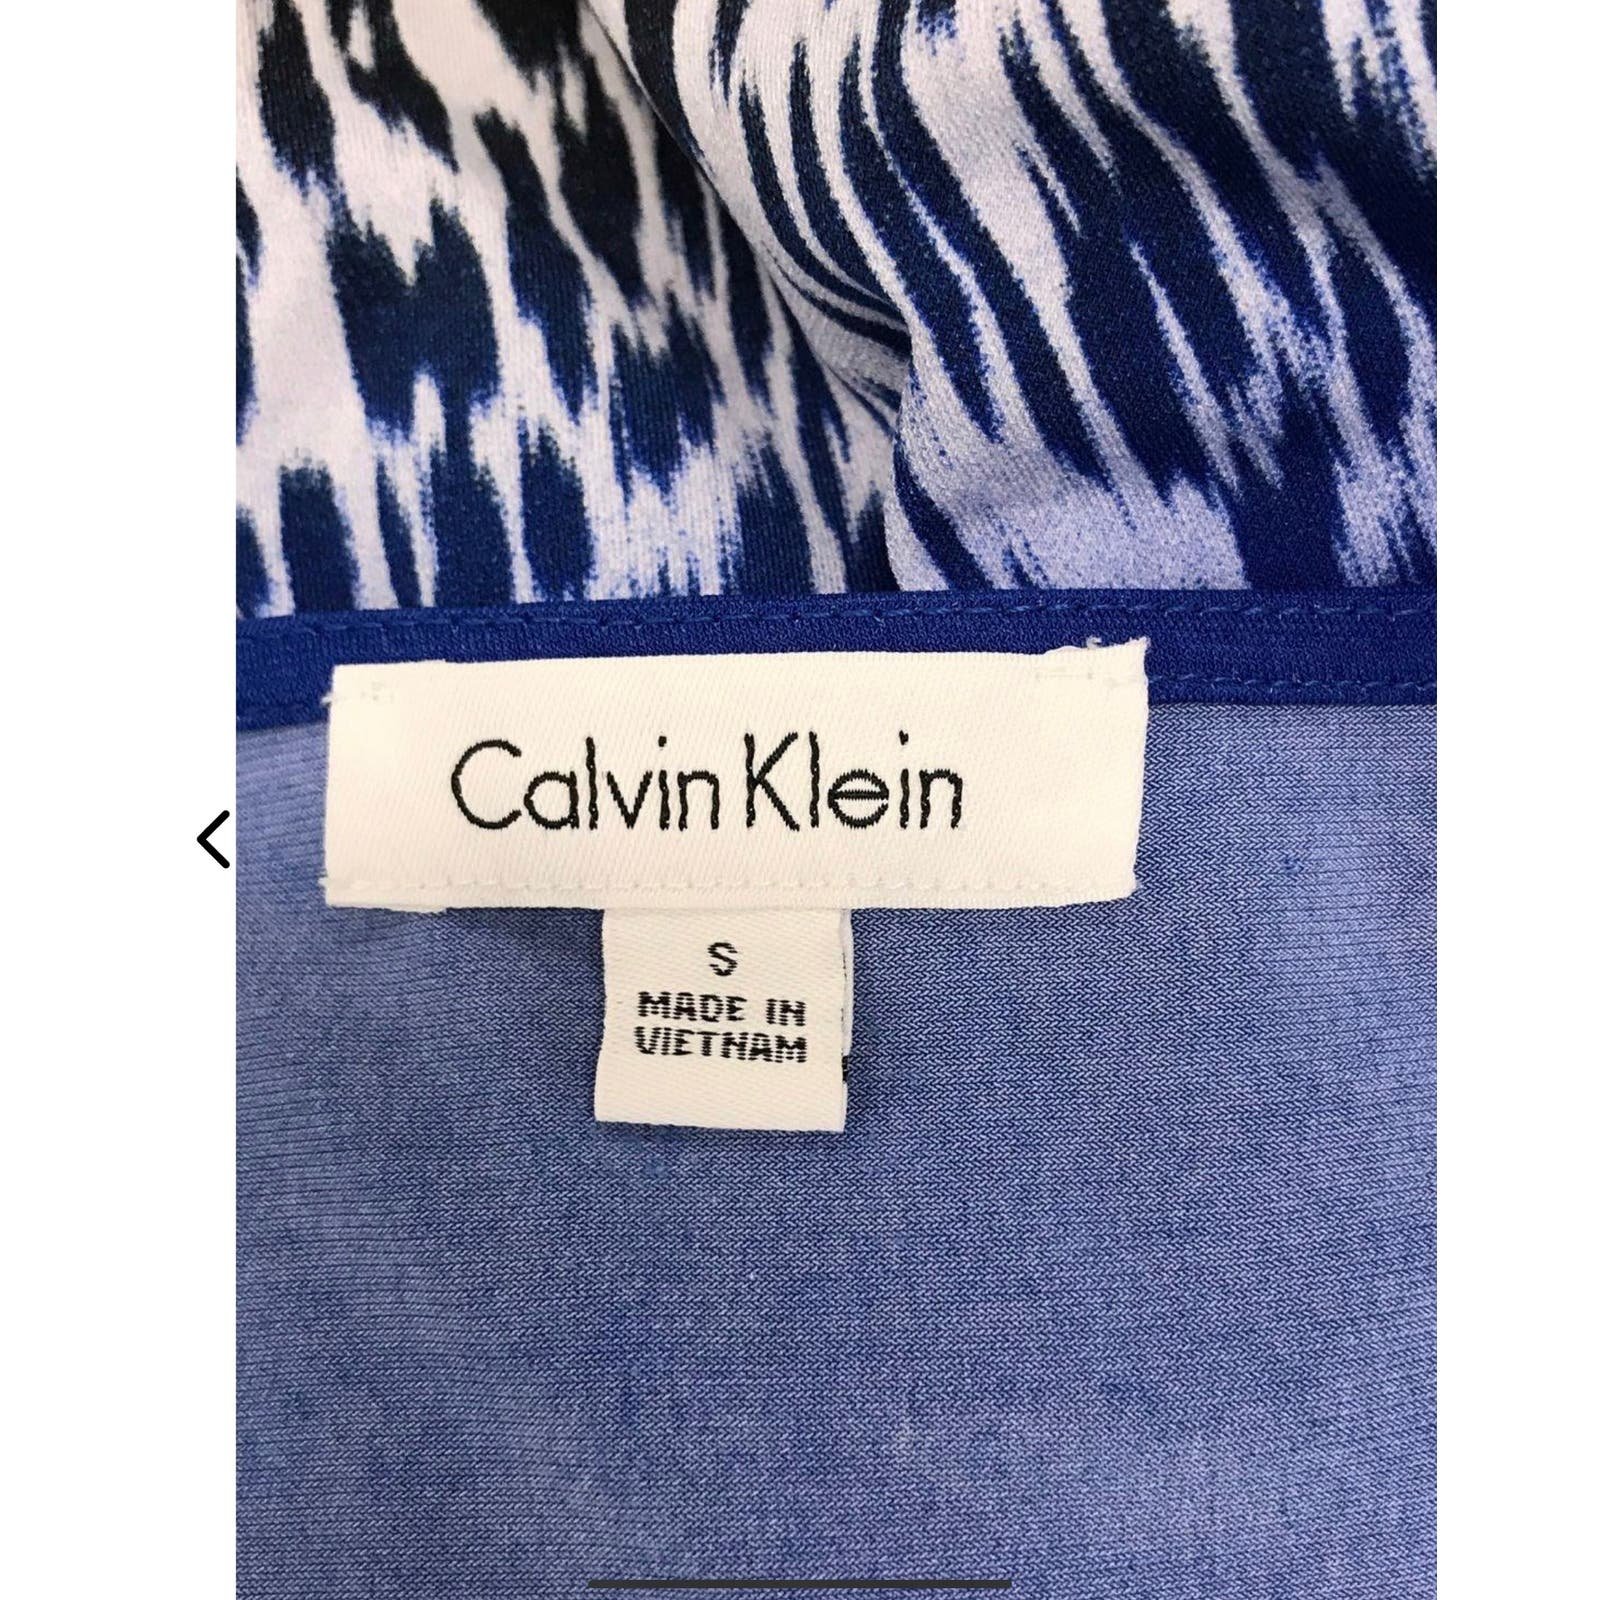 Calvin Klein Ombrè Royal Blue Black and White Animal Print Blouse in EUC. Sz S. g5rqa8gzK